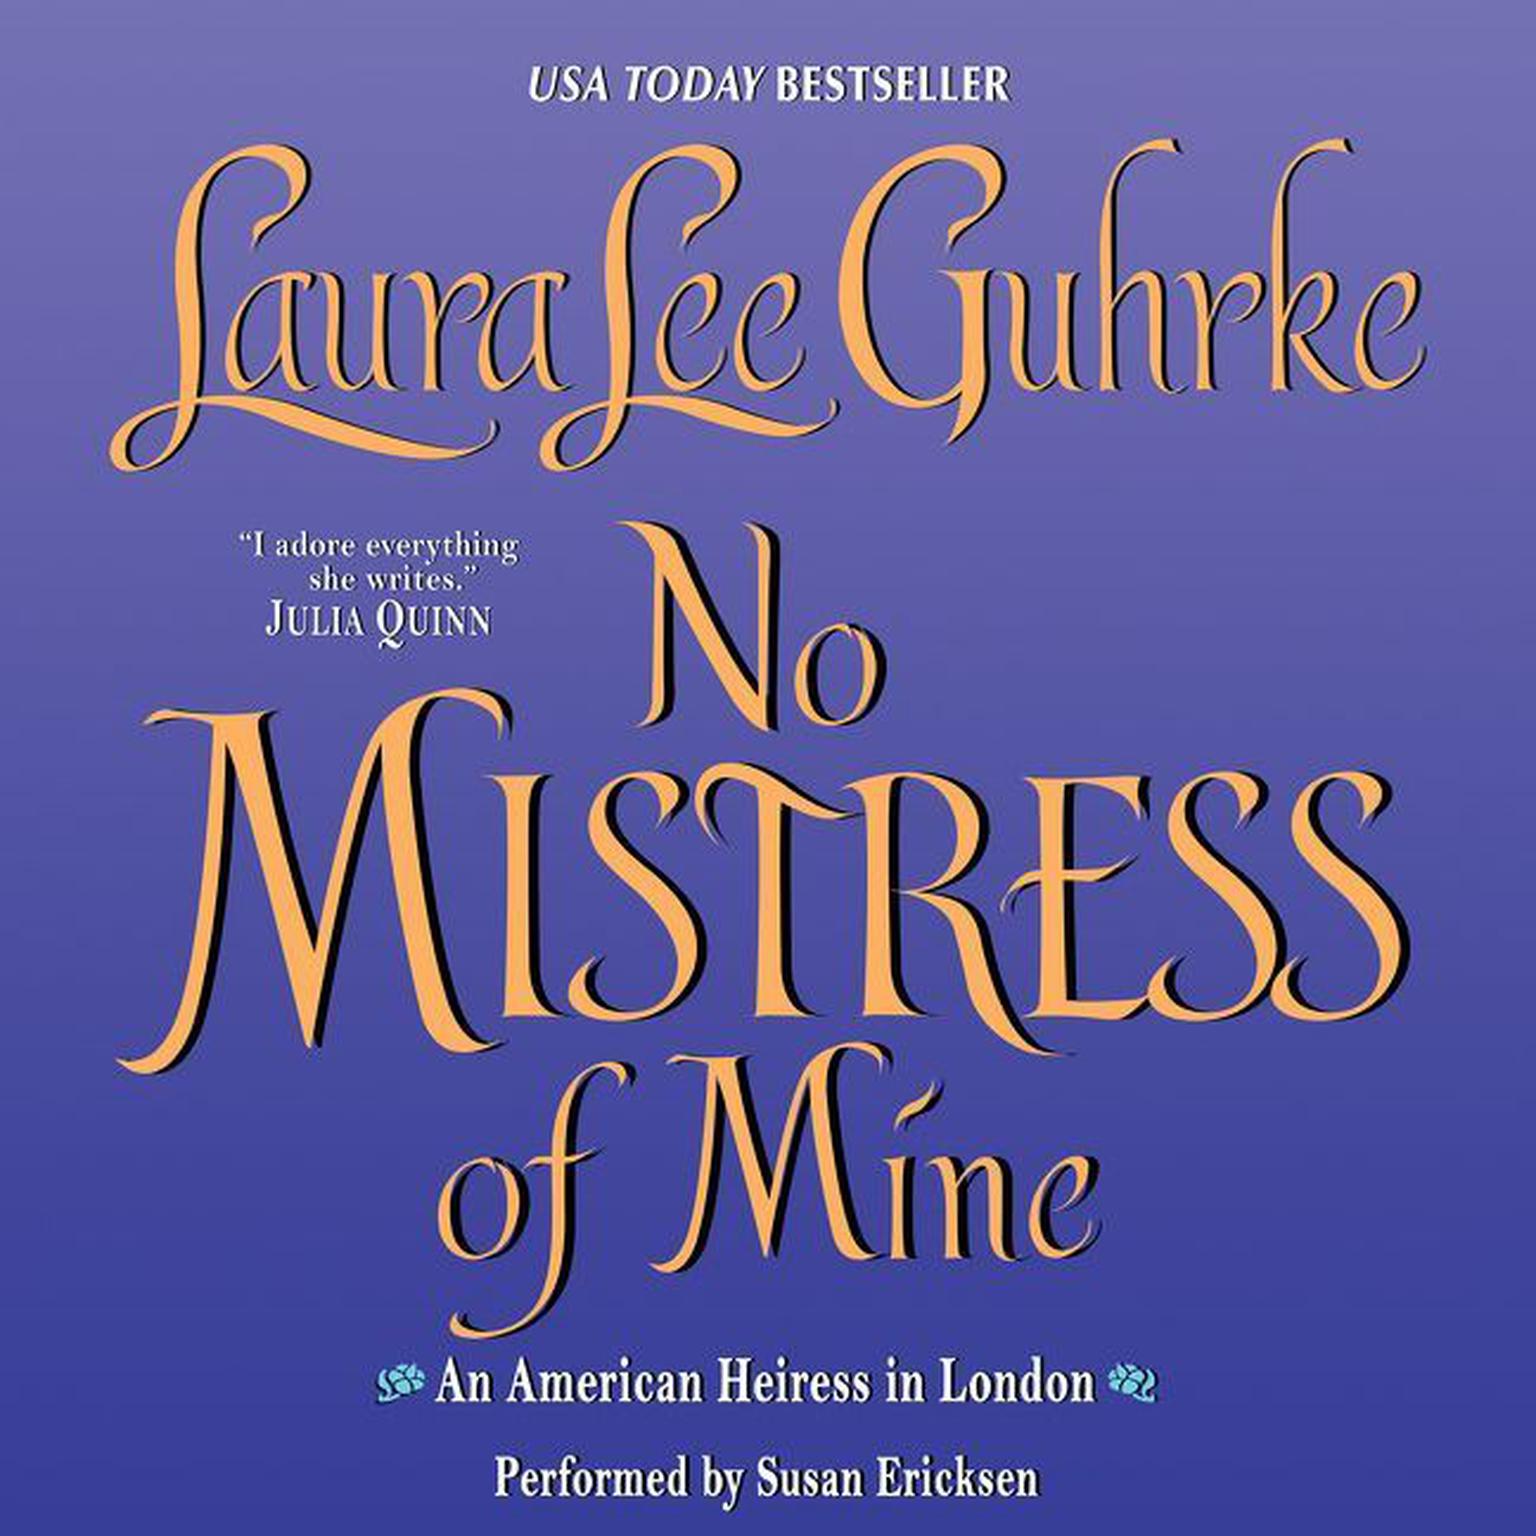 No Mistress of Mine: An American Heiress in London Audiobook, by Laura Lee Guhrke